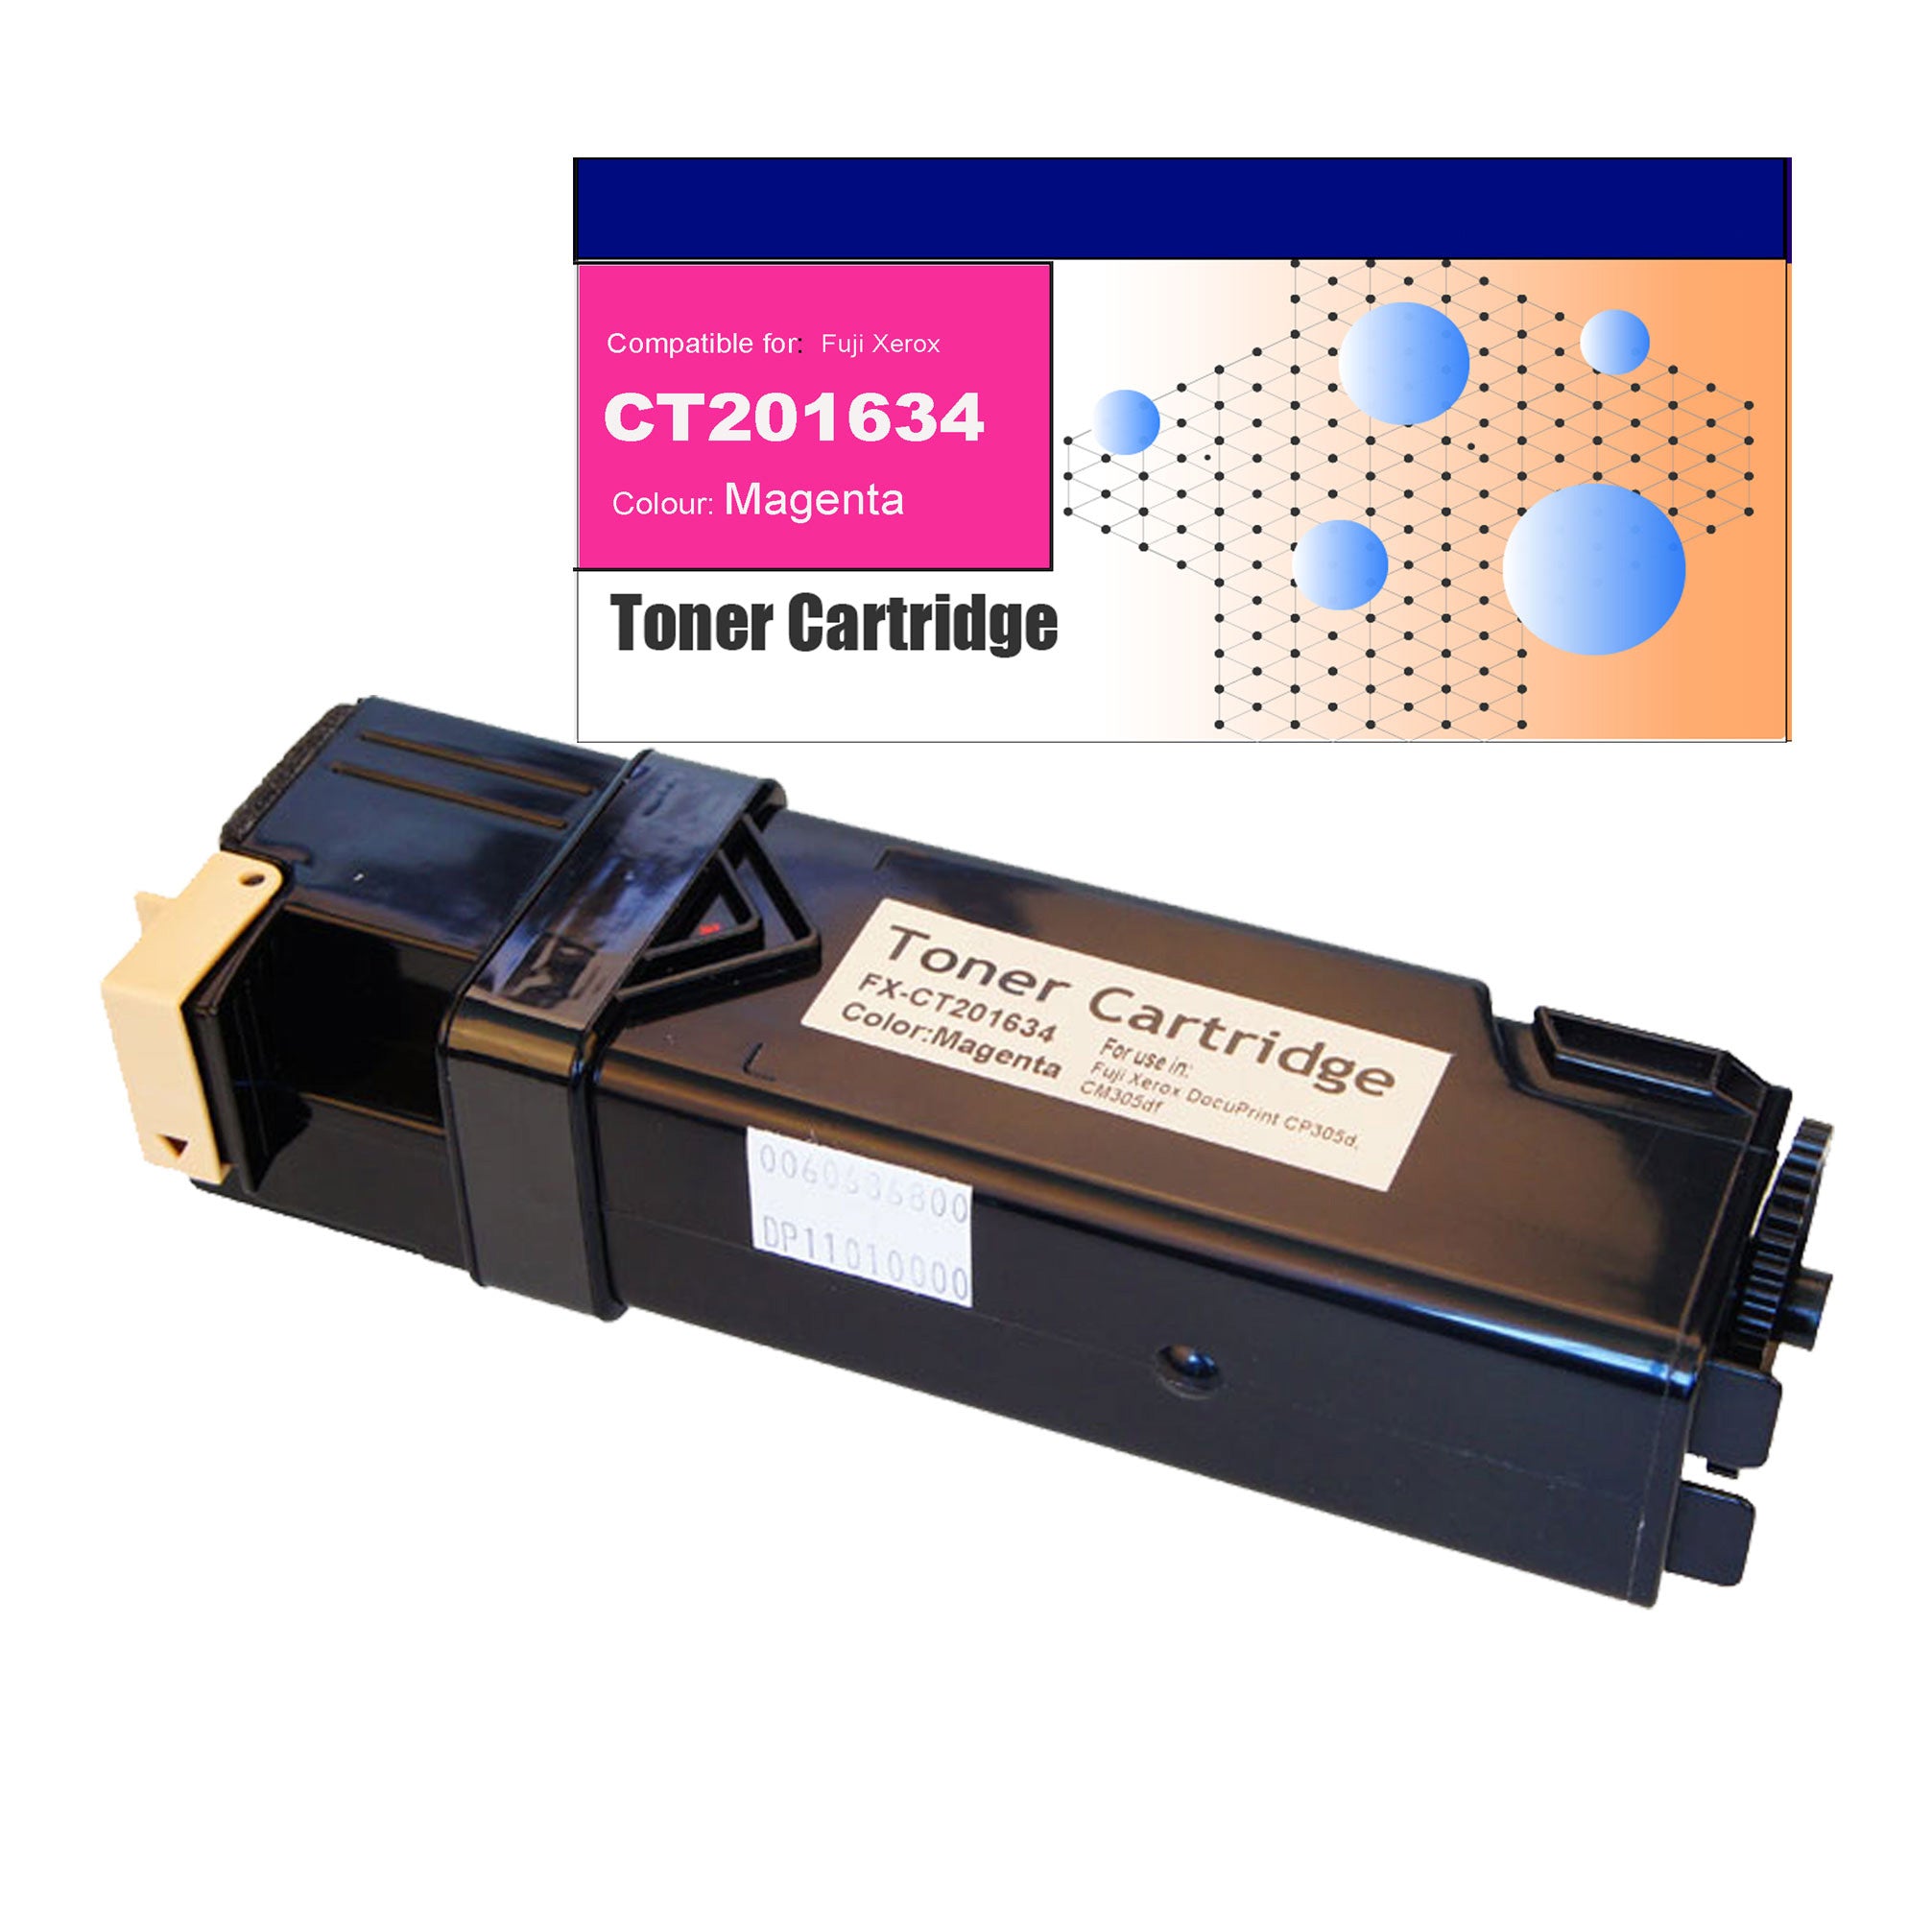 Compatible Toner for Fuji Xerox CT201634 (CP305) Magenta Toner Cartridges